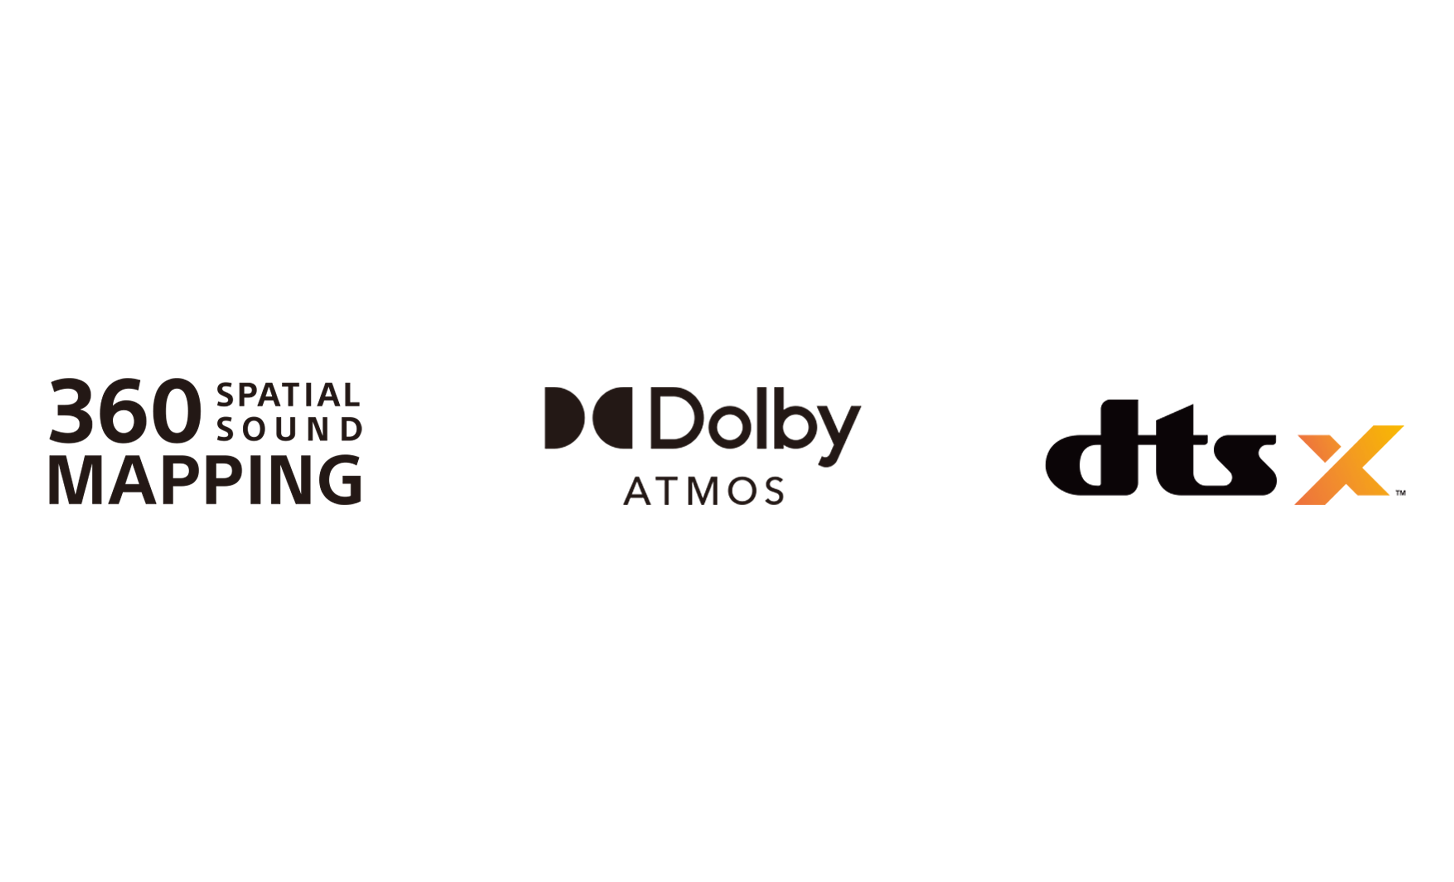 Logo 360 Spatial Sound Mapping, logo Dolby Atmos, logo dtsX